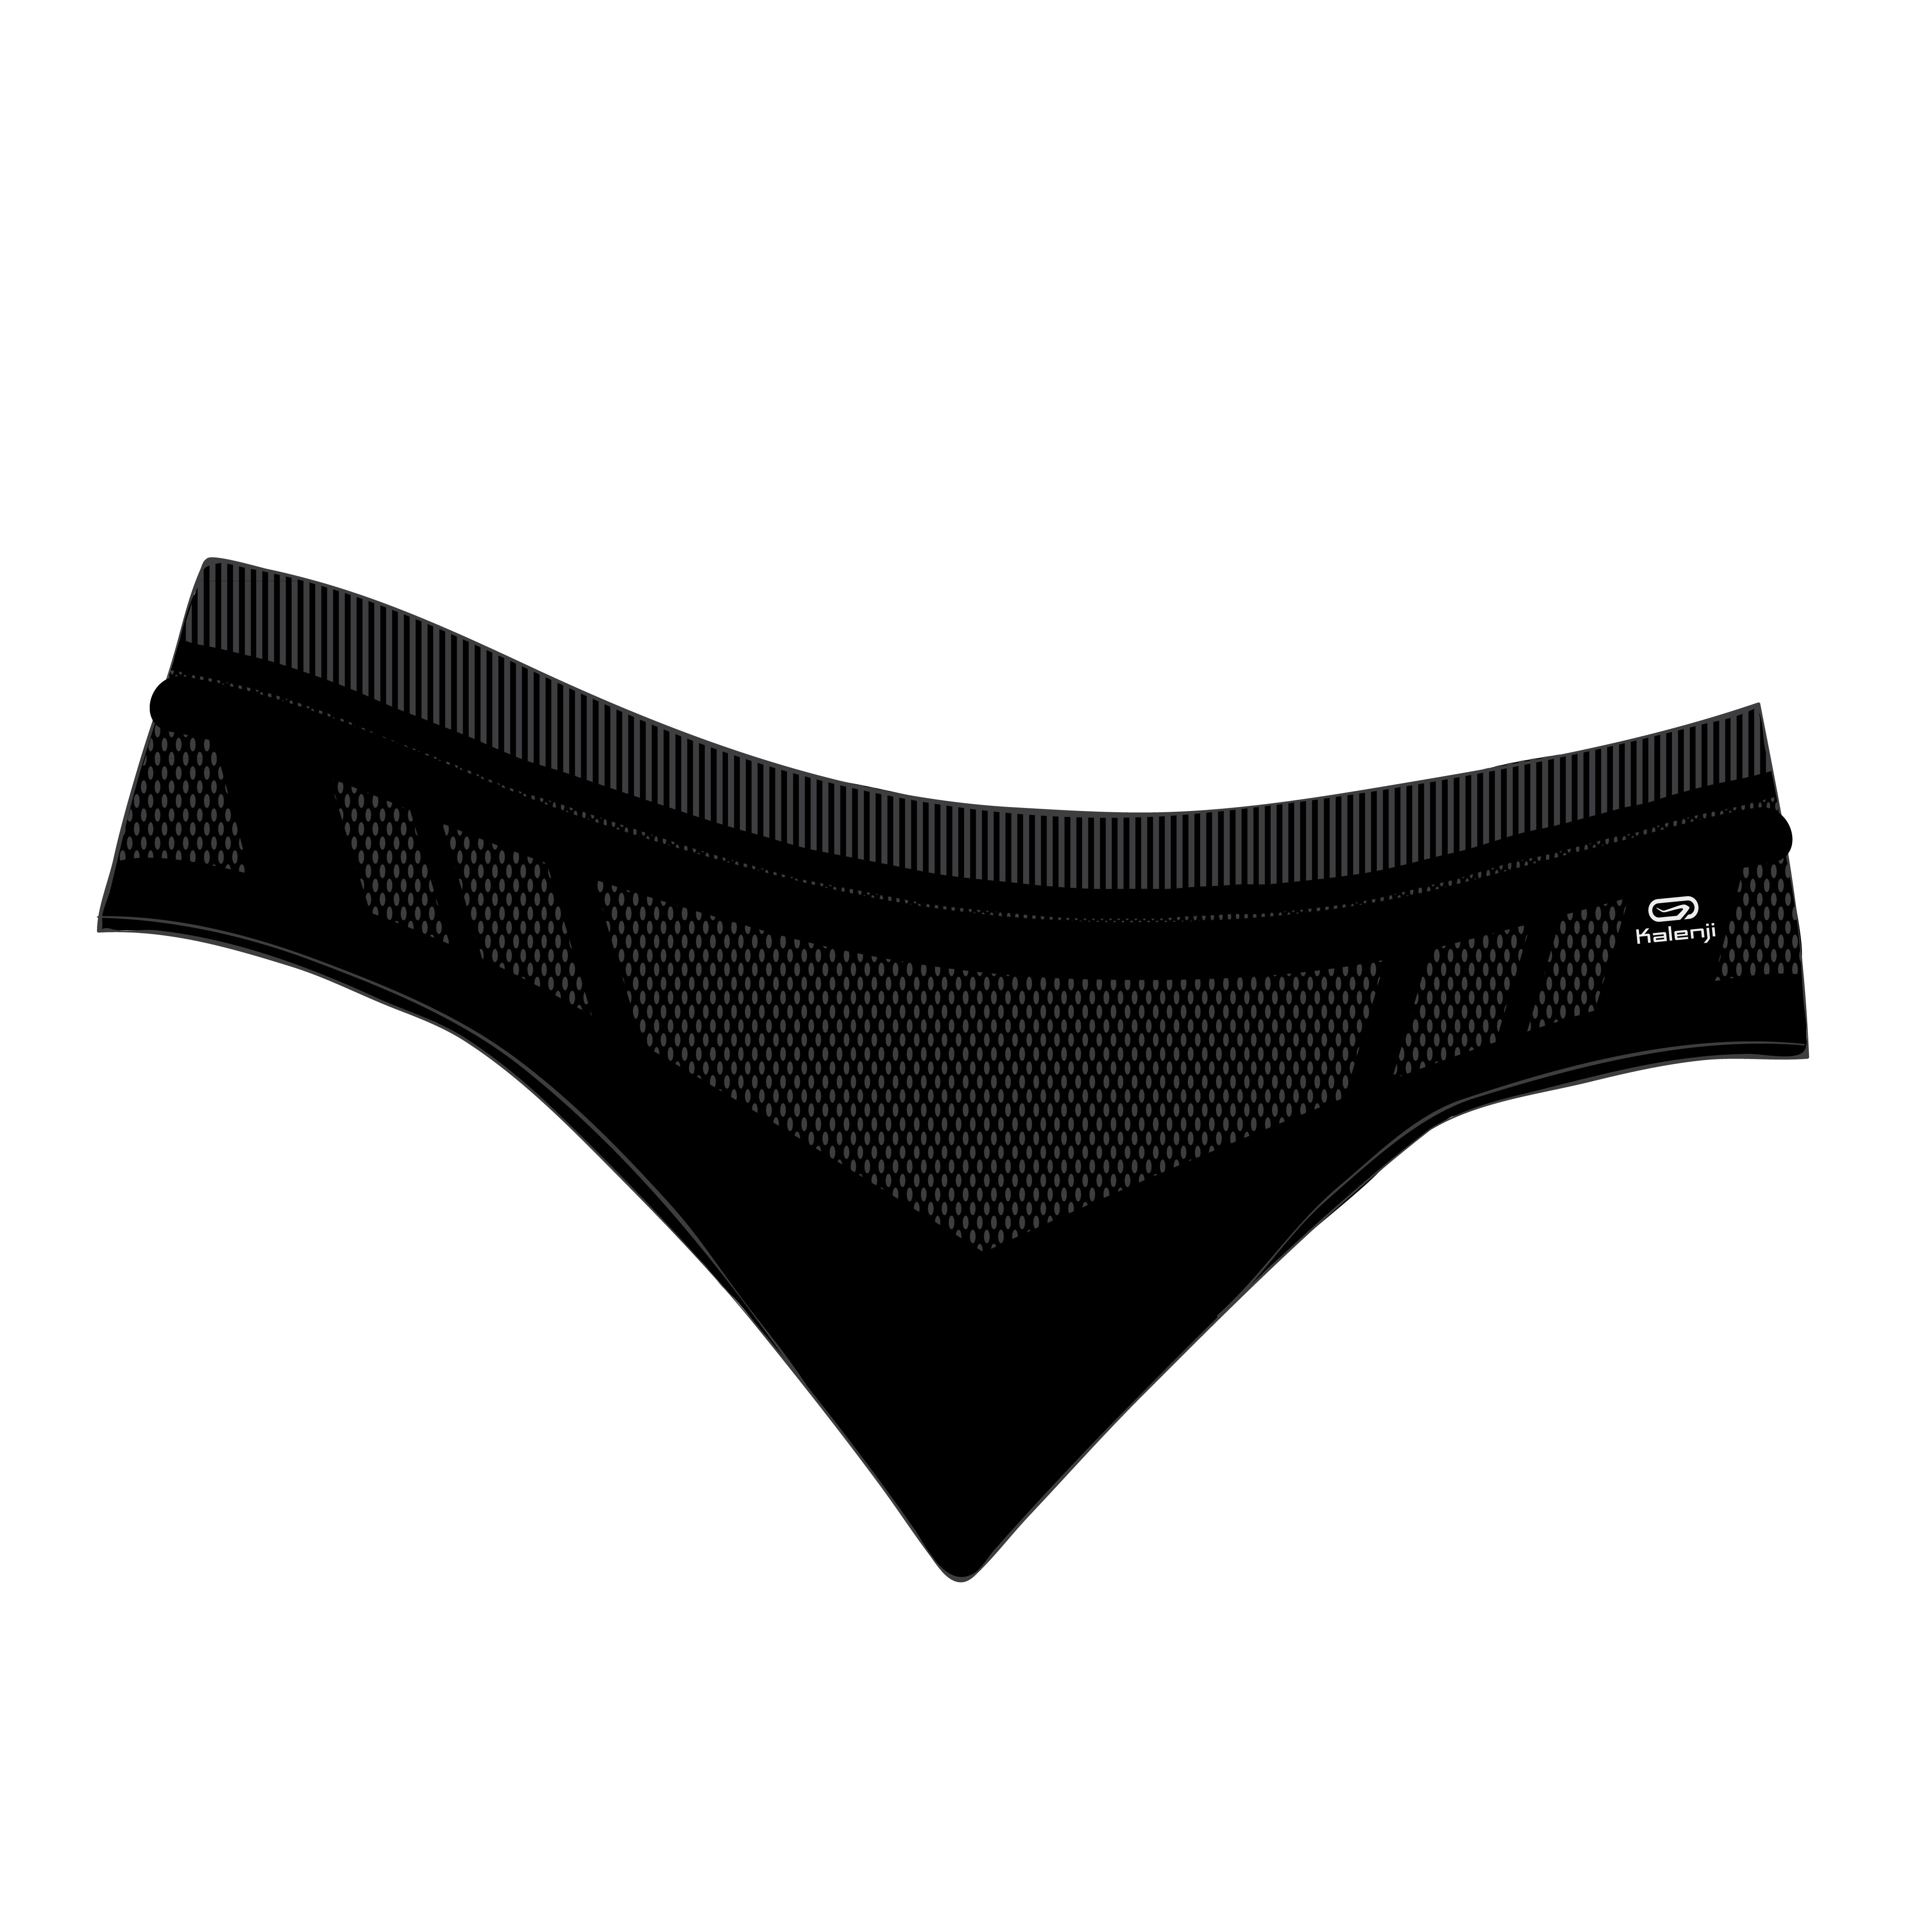 Running Thong Underwear - Women - Black - Kalenji - Decathlon